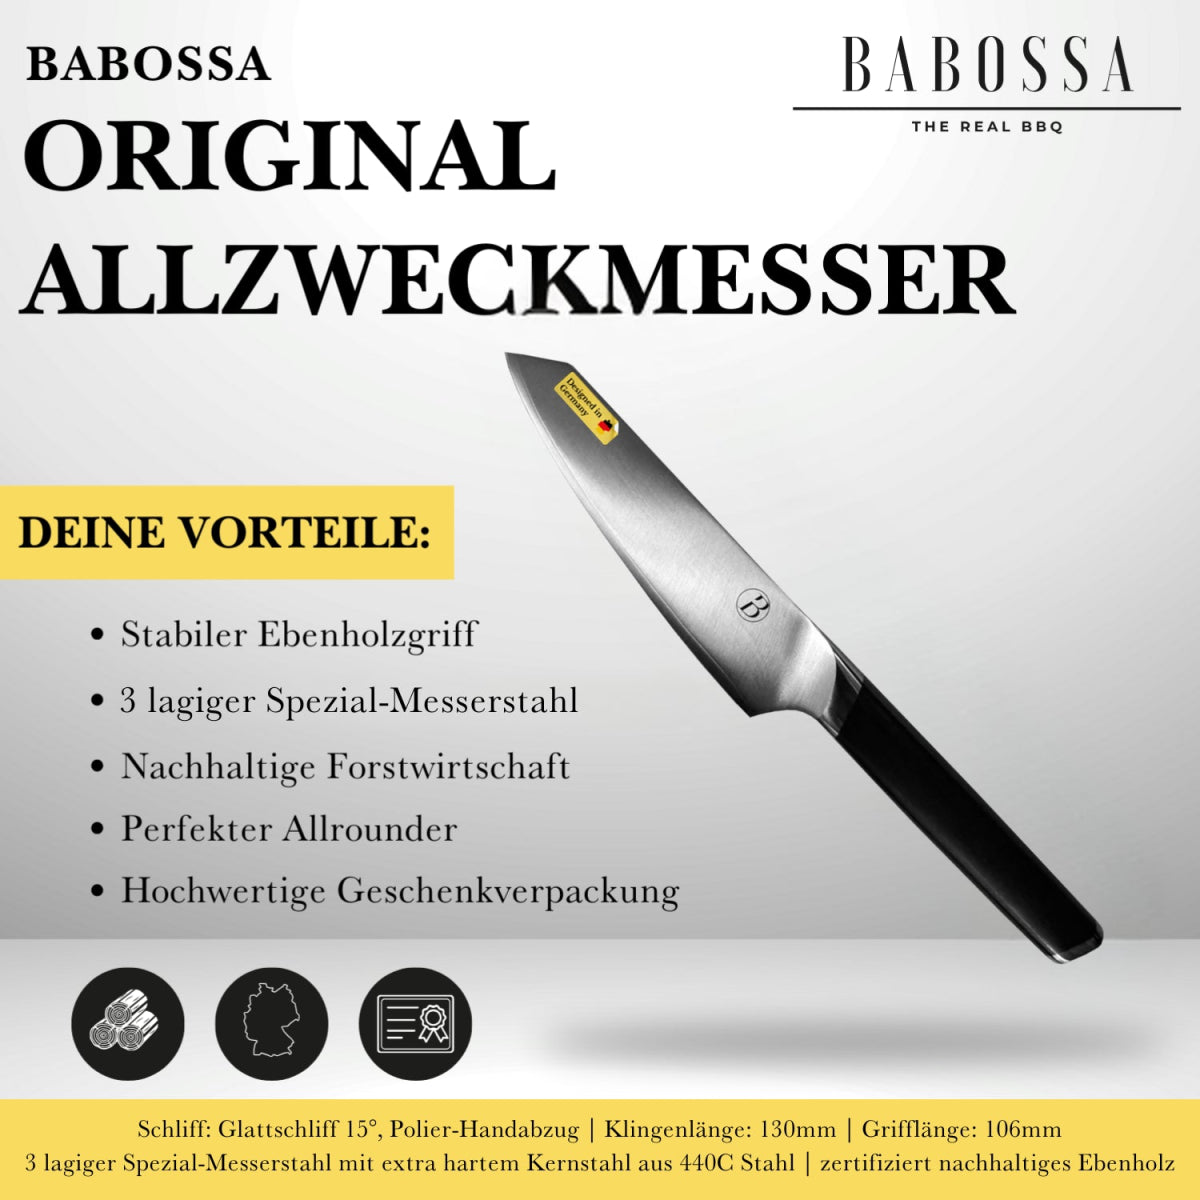 "Original" Allzweckmesser - BABOSSA"Original" AllzweckmesserMesserBABOSSABABOSSA